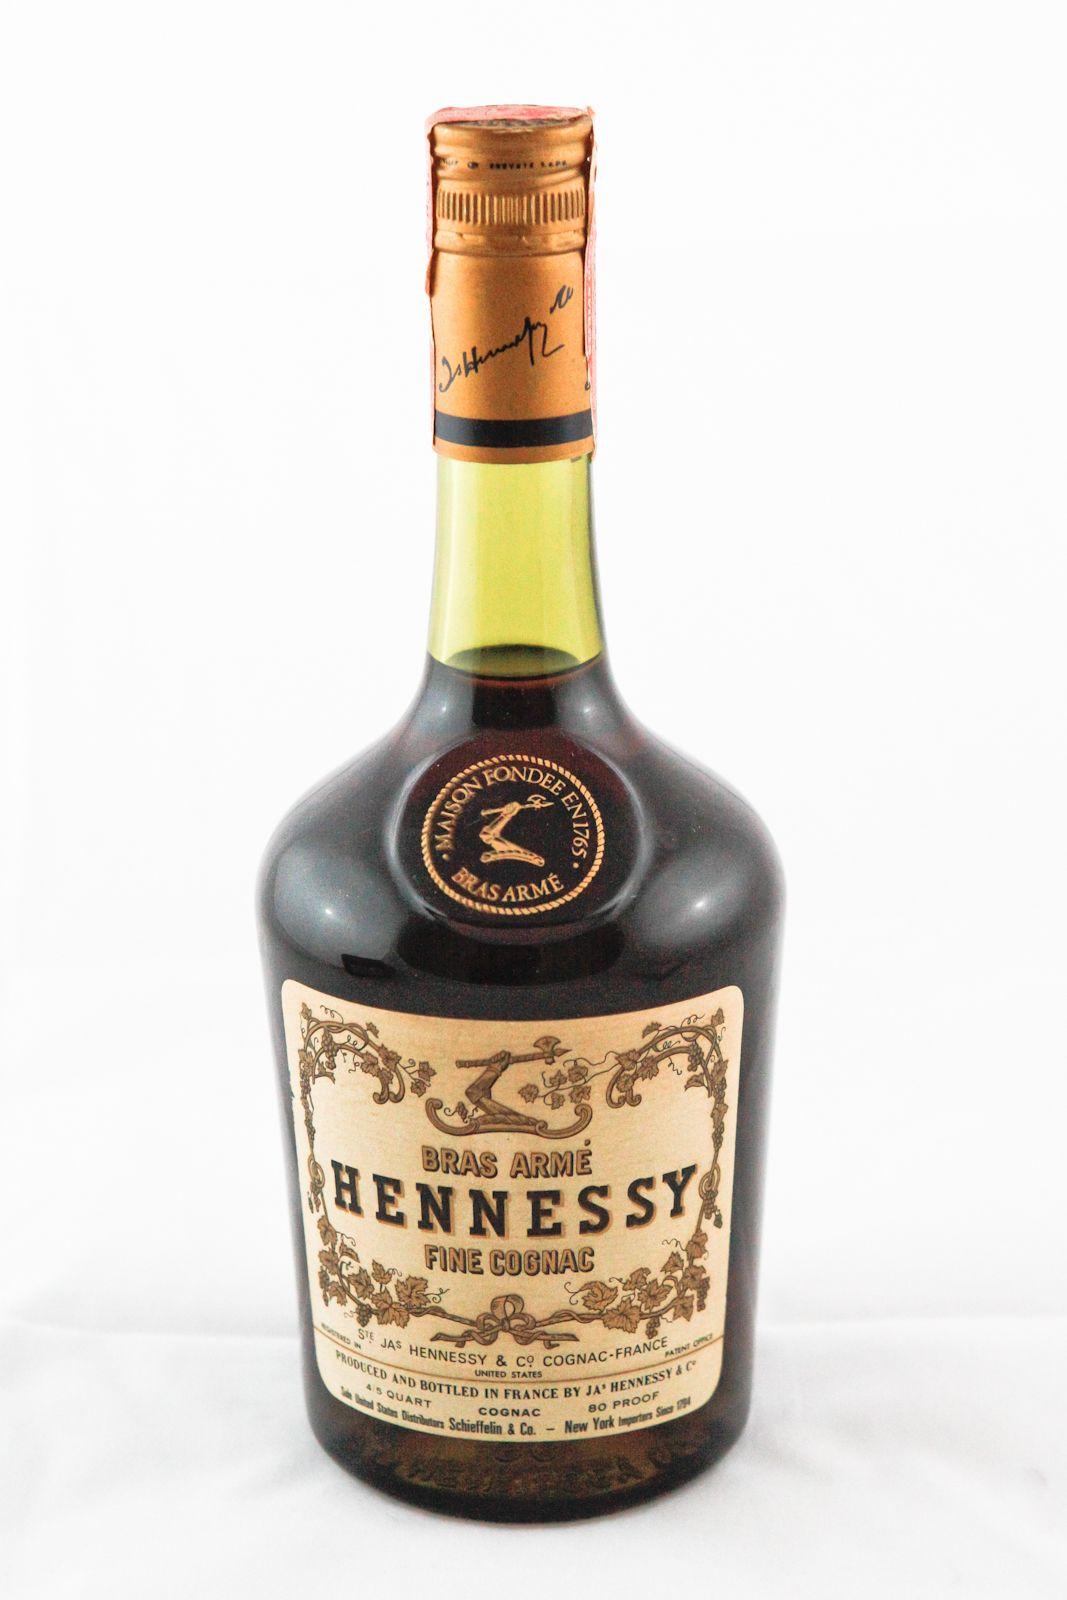 Hennessy Cognac Label Logo - Hennessy Bras Armé Fine Cognac to offer | Cognac Expert Blog